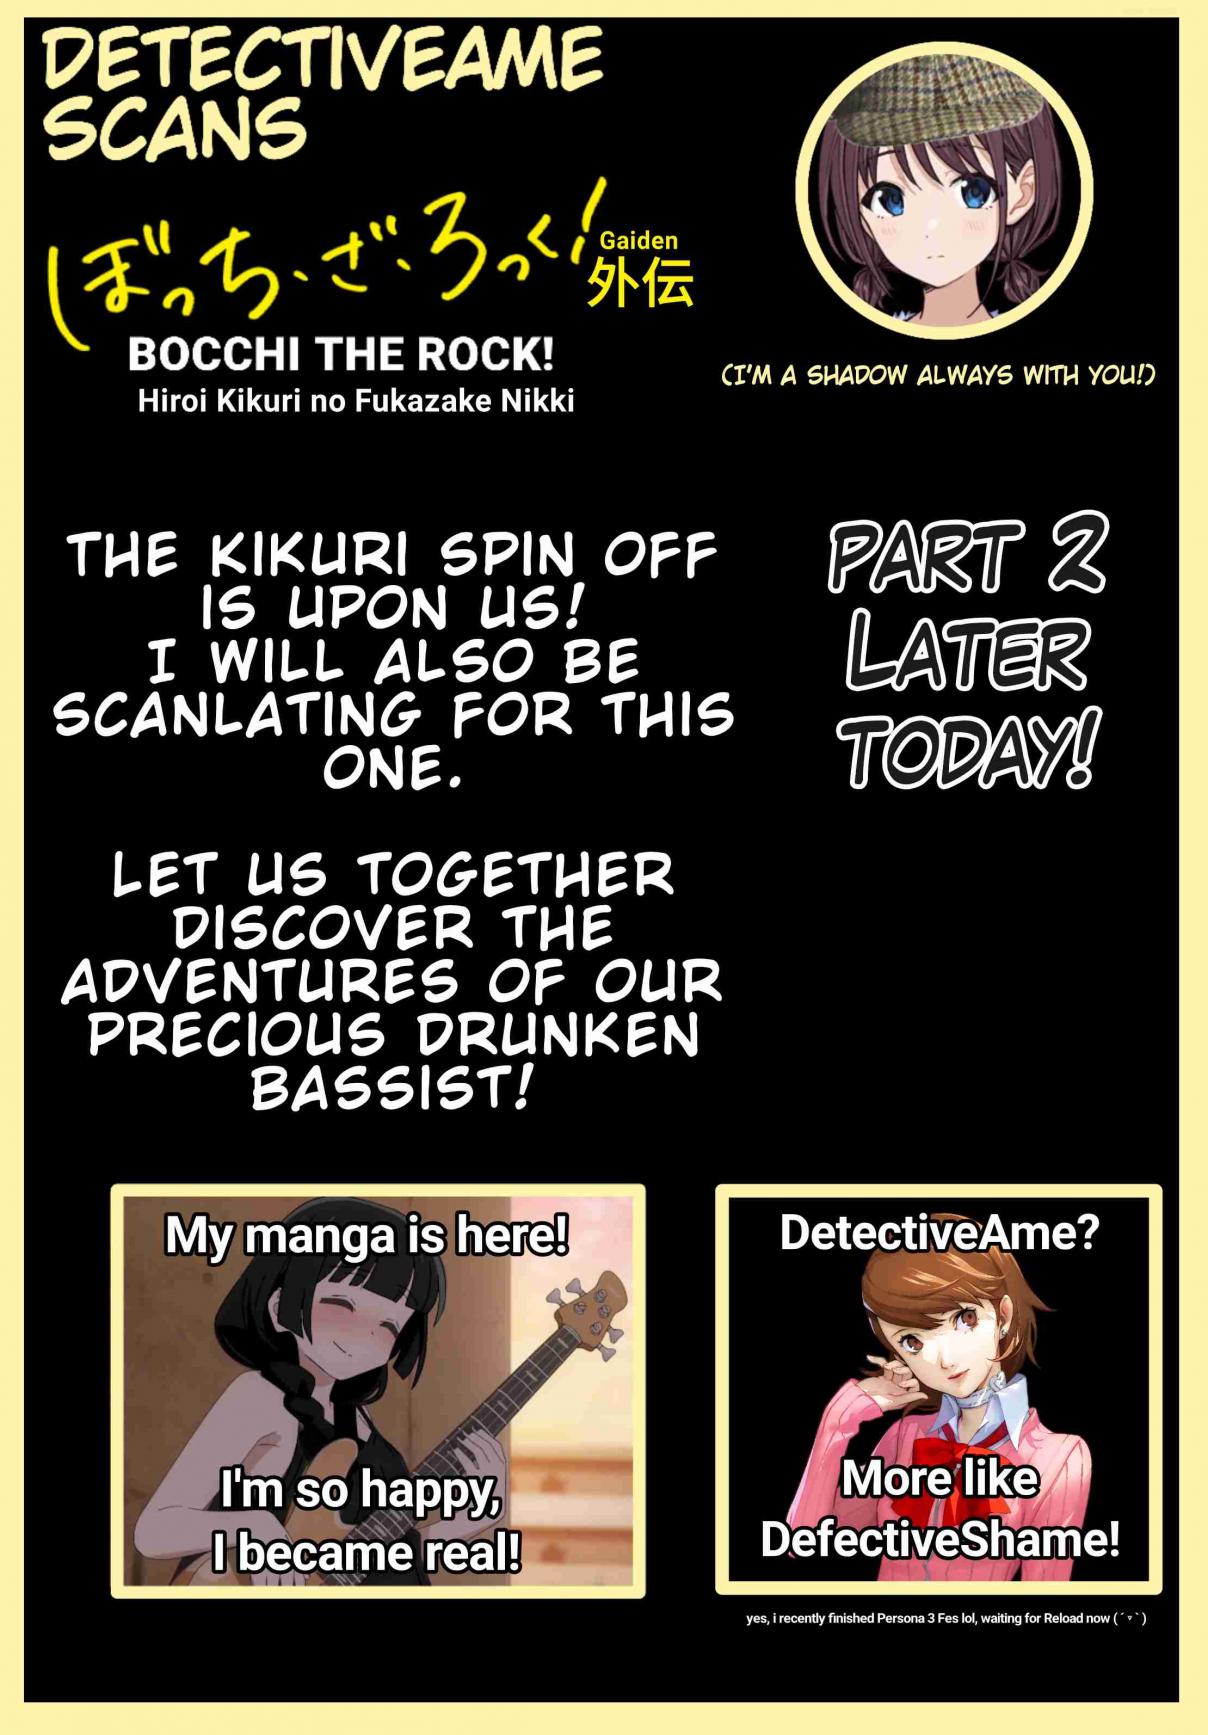 Bocchi the Rock! Gaiden: Hiroi Kikuri no Fukazake Nikki 1.1